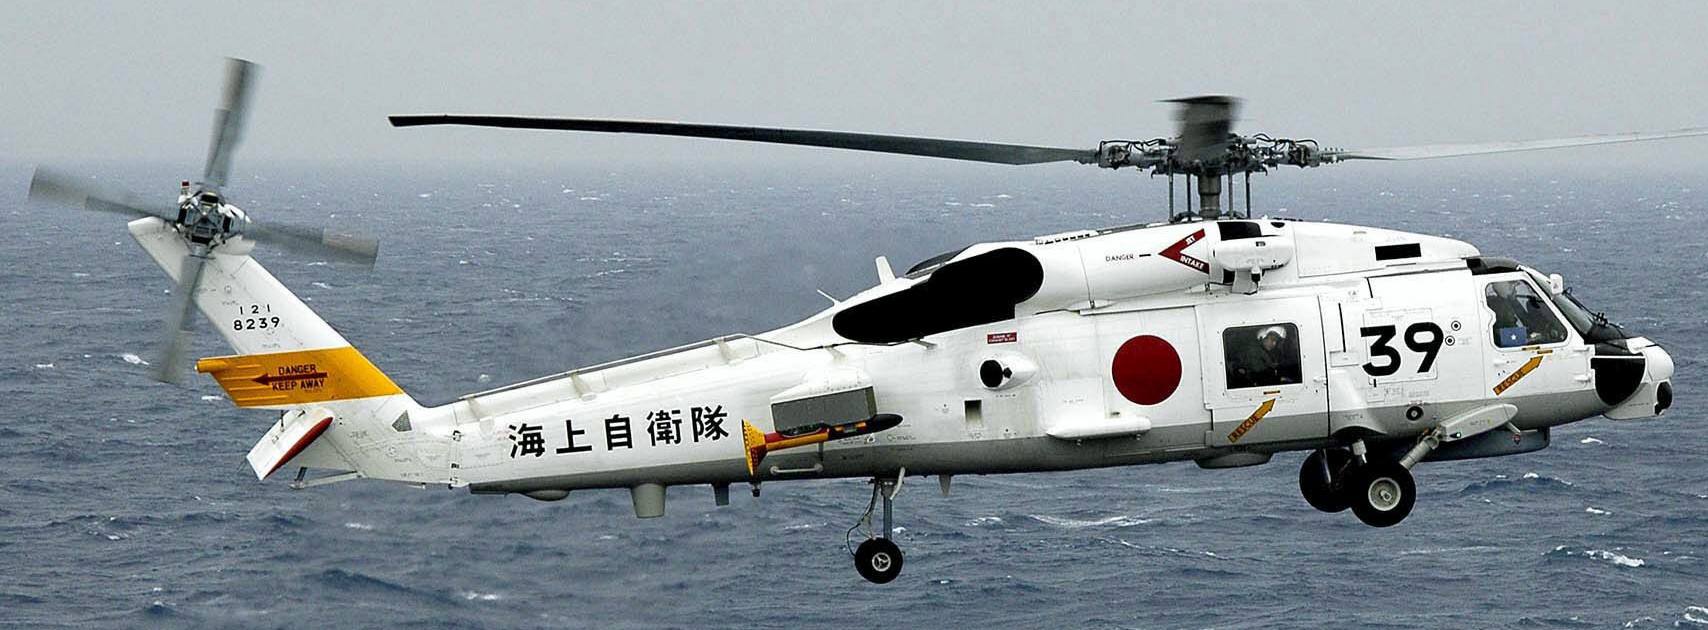 mitsubishi sh-60j naval helicopter anti submarine japan maritime self defense force seahawk jmsdf 8239 02